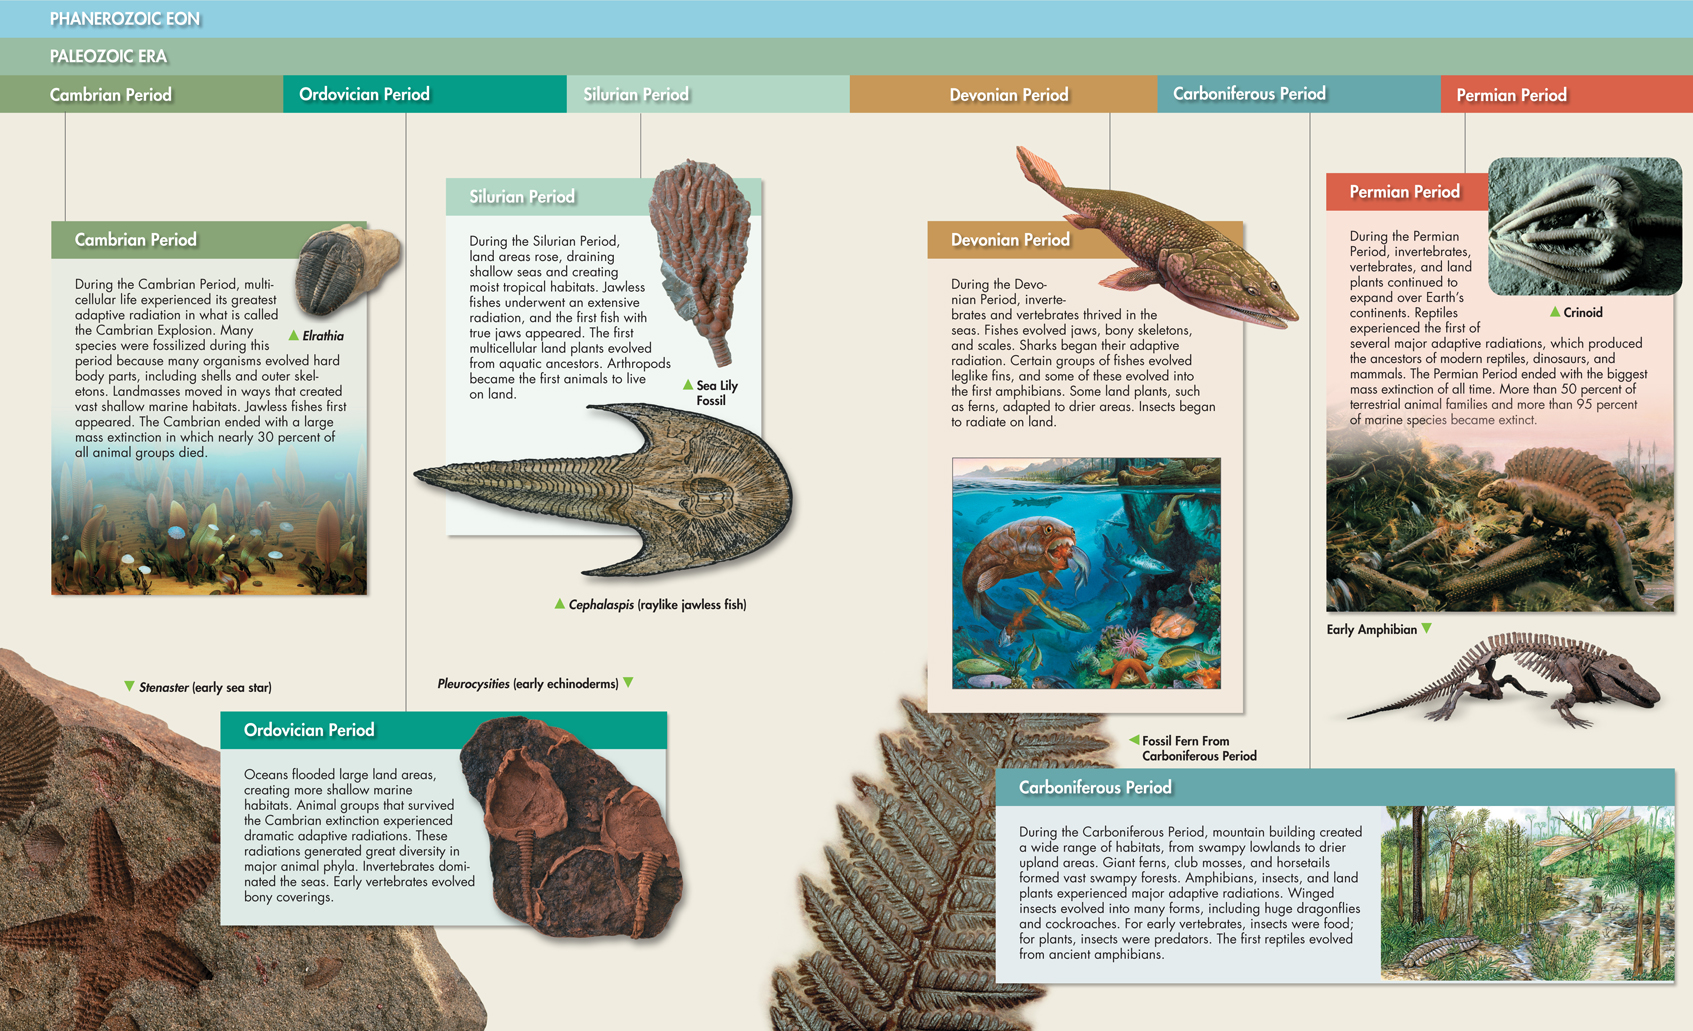 Classification of Paleozoic Era